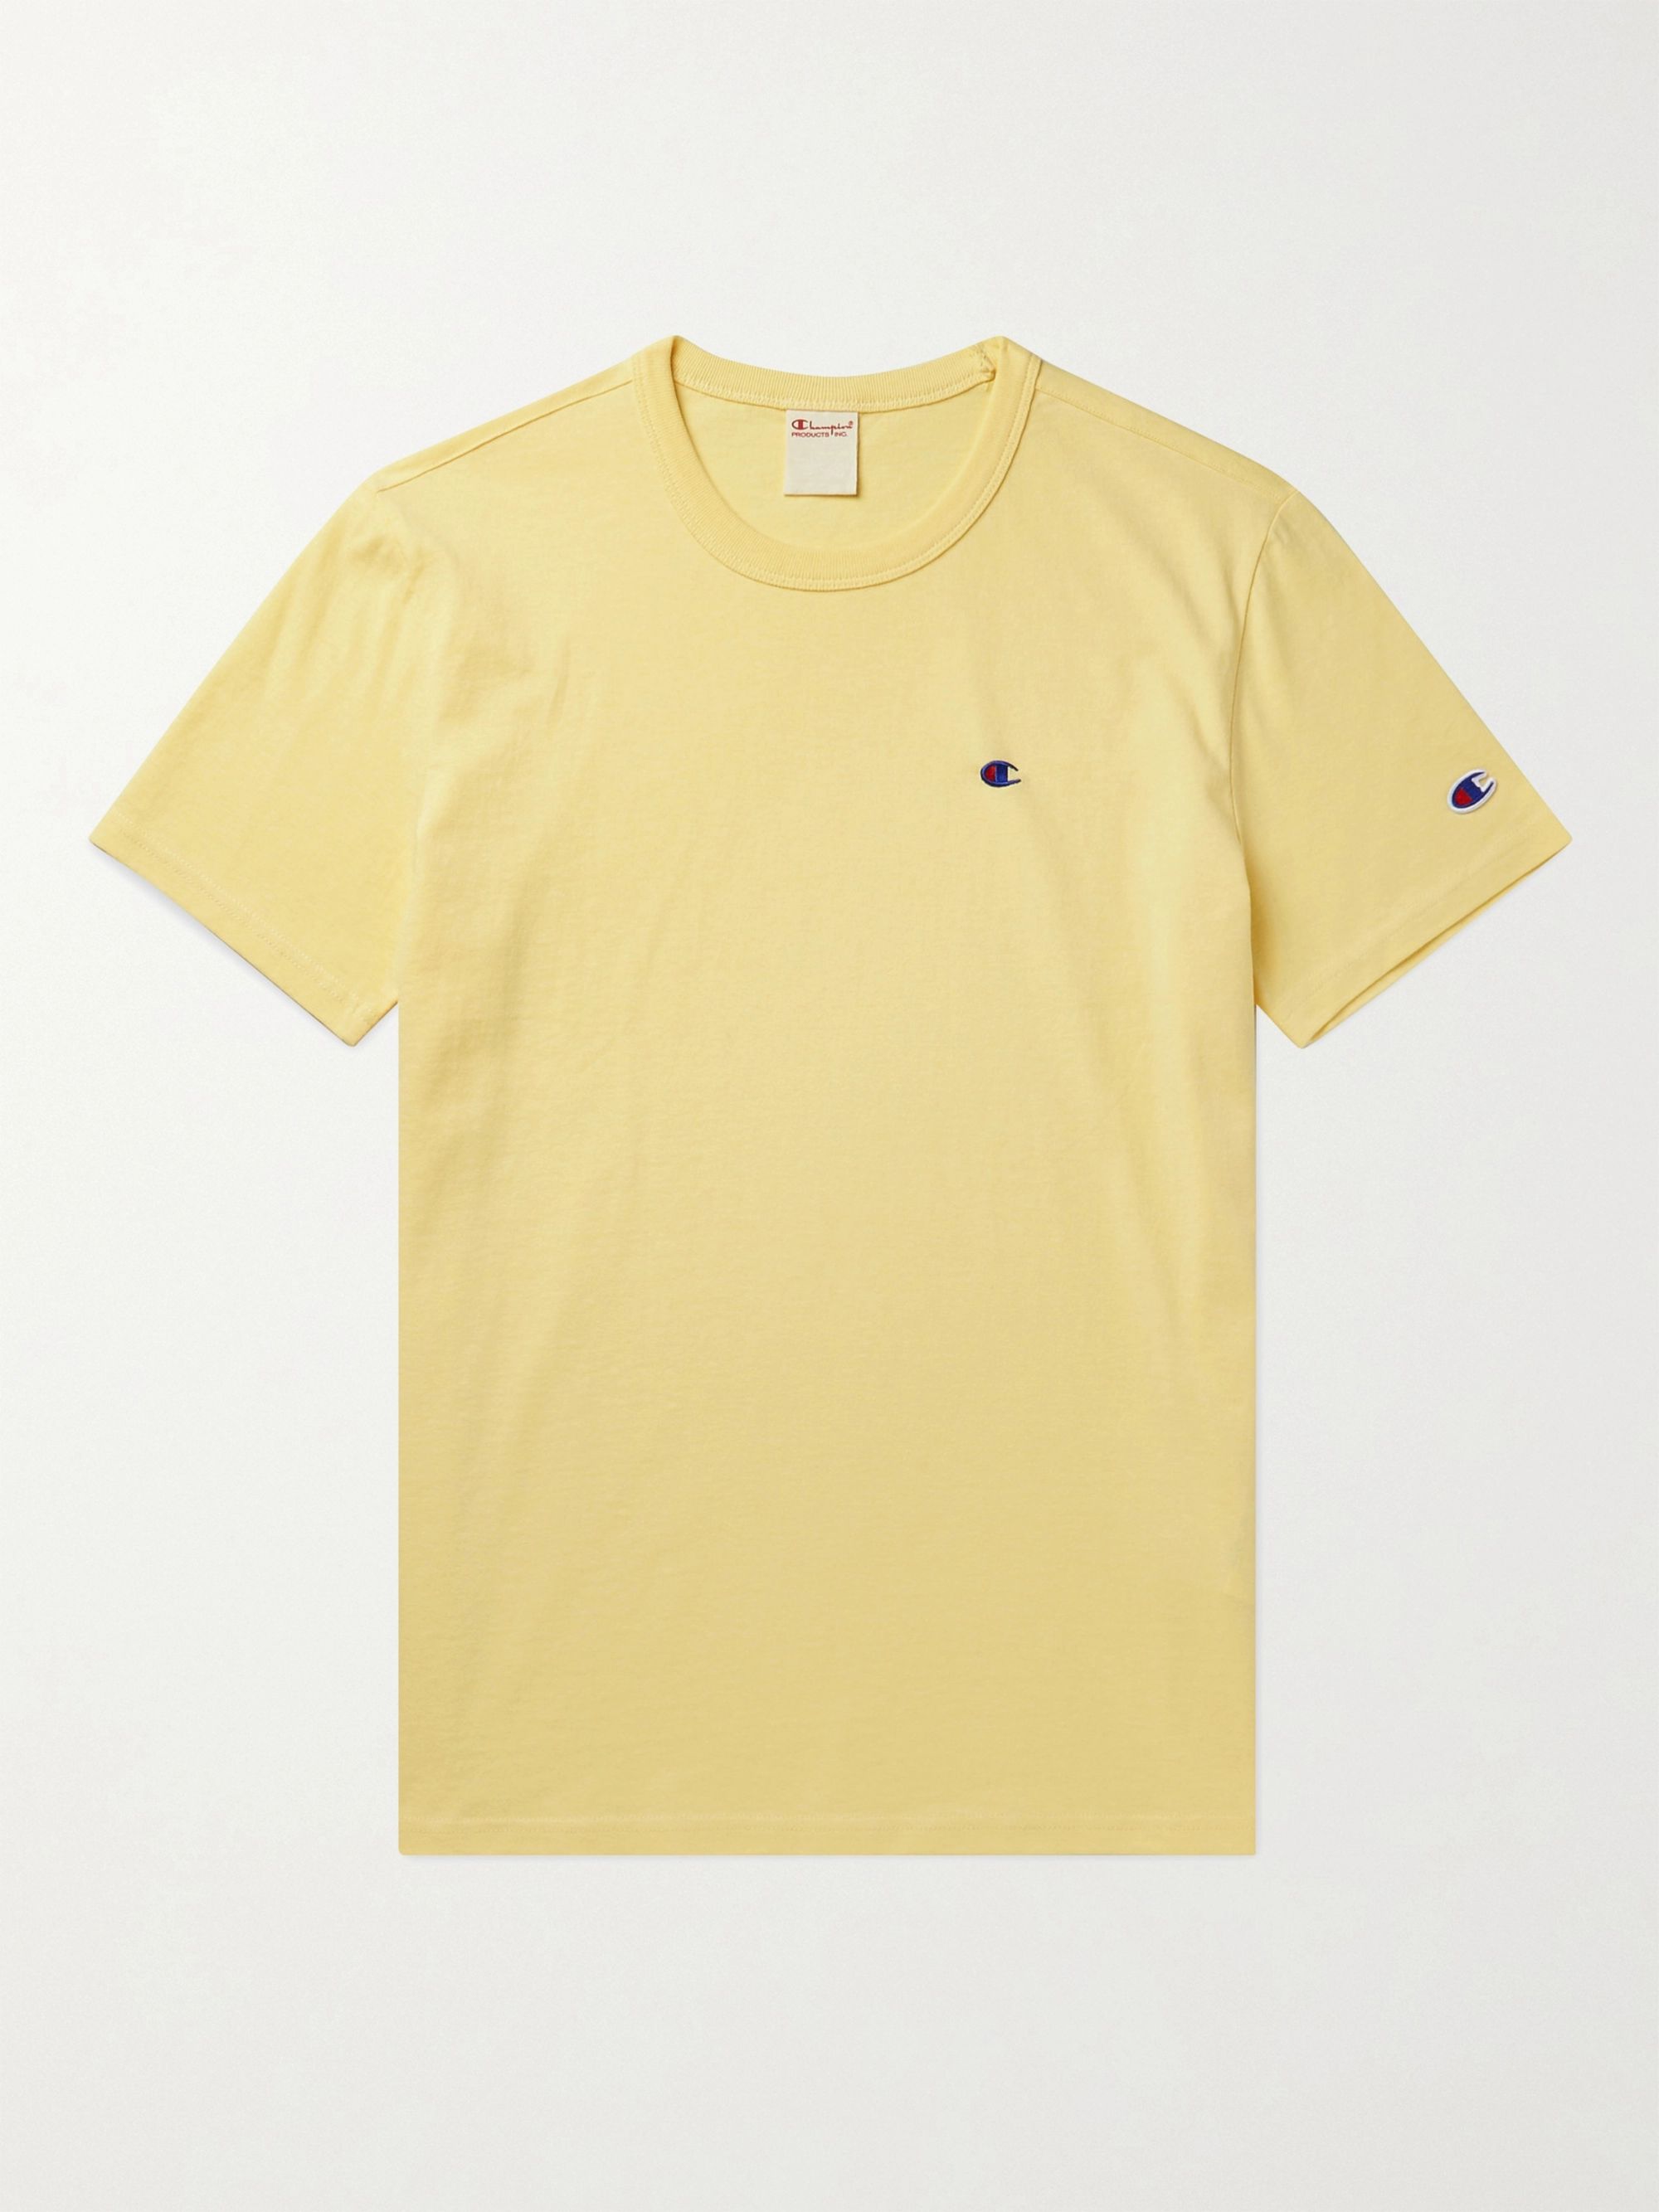 yellow t shirt champion